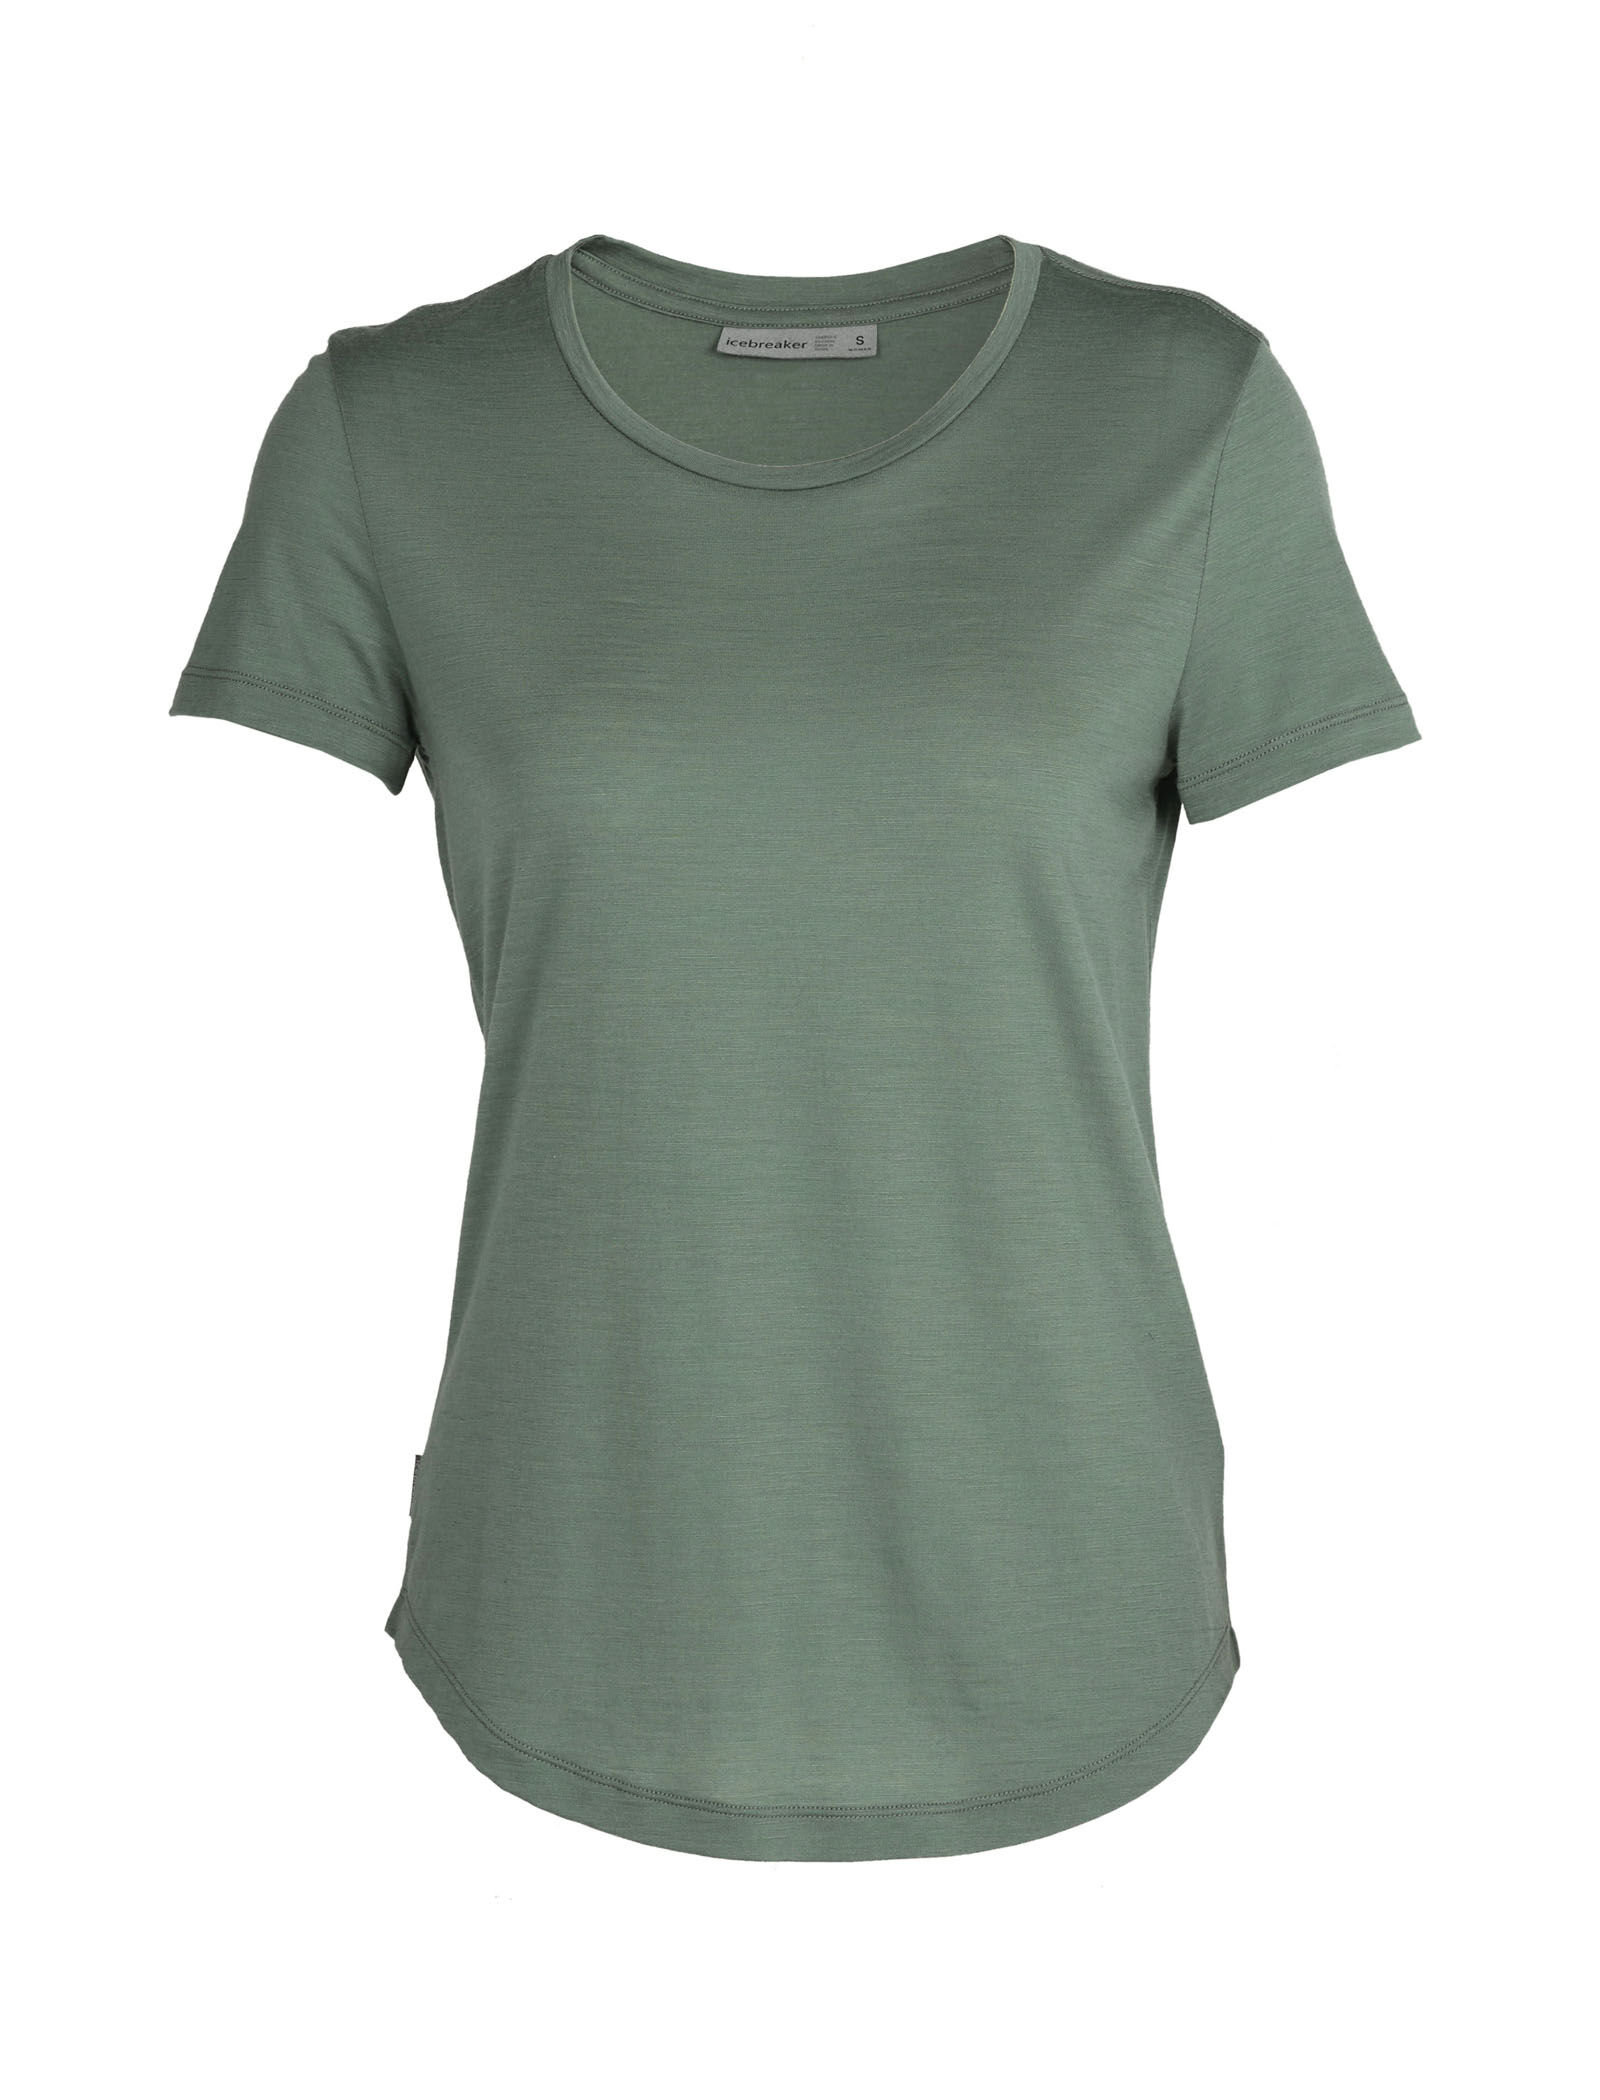 Sun Protection Lightweight Crewneck Shirts Athletic Hiking T-Shirts Tops Tee CRYSULLY Women's Short Sleeve UPF 50 